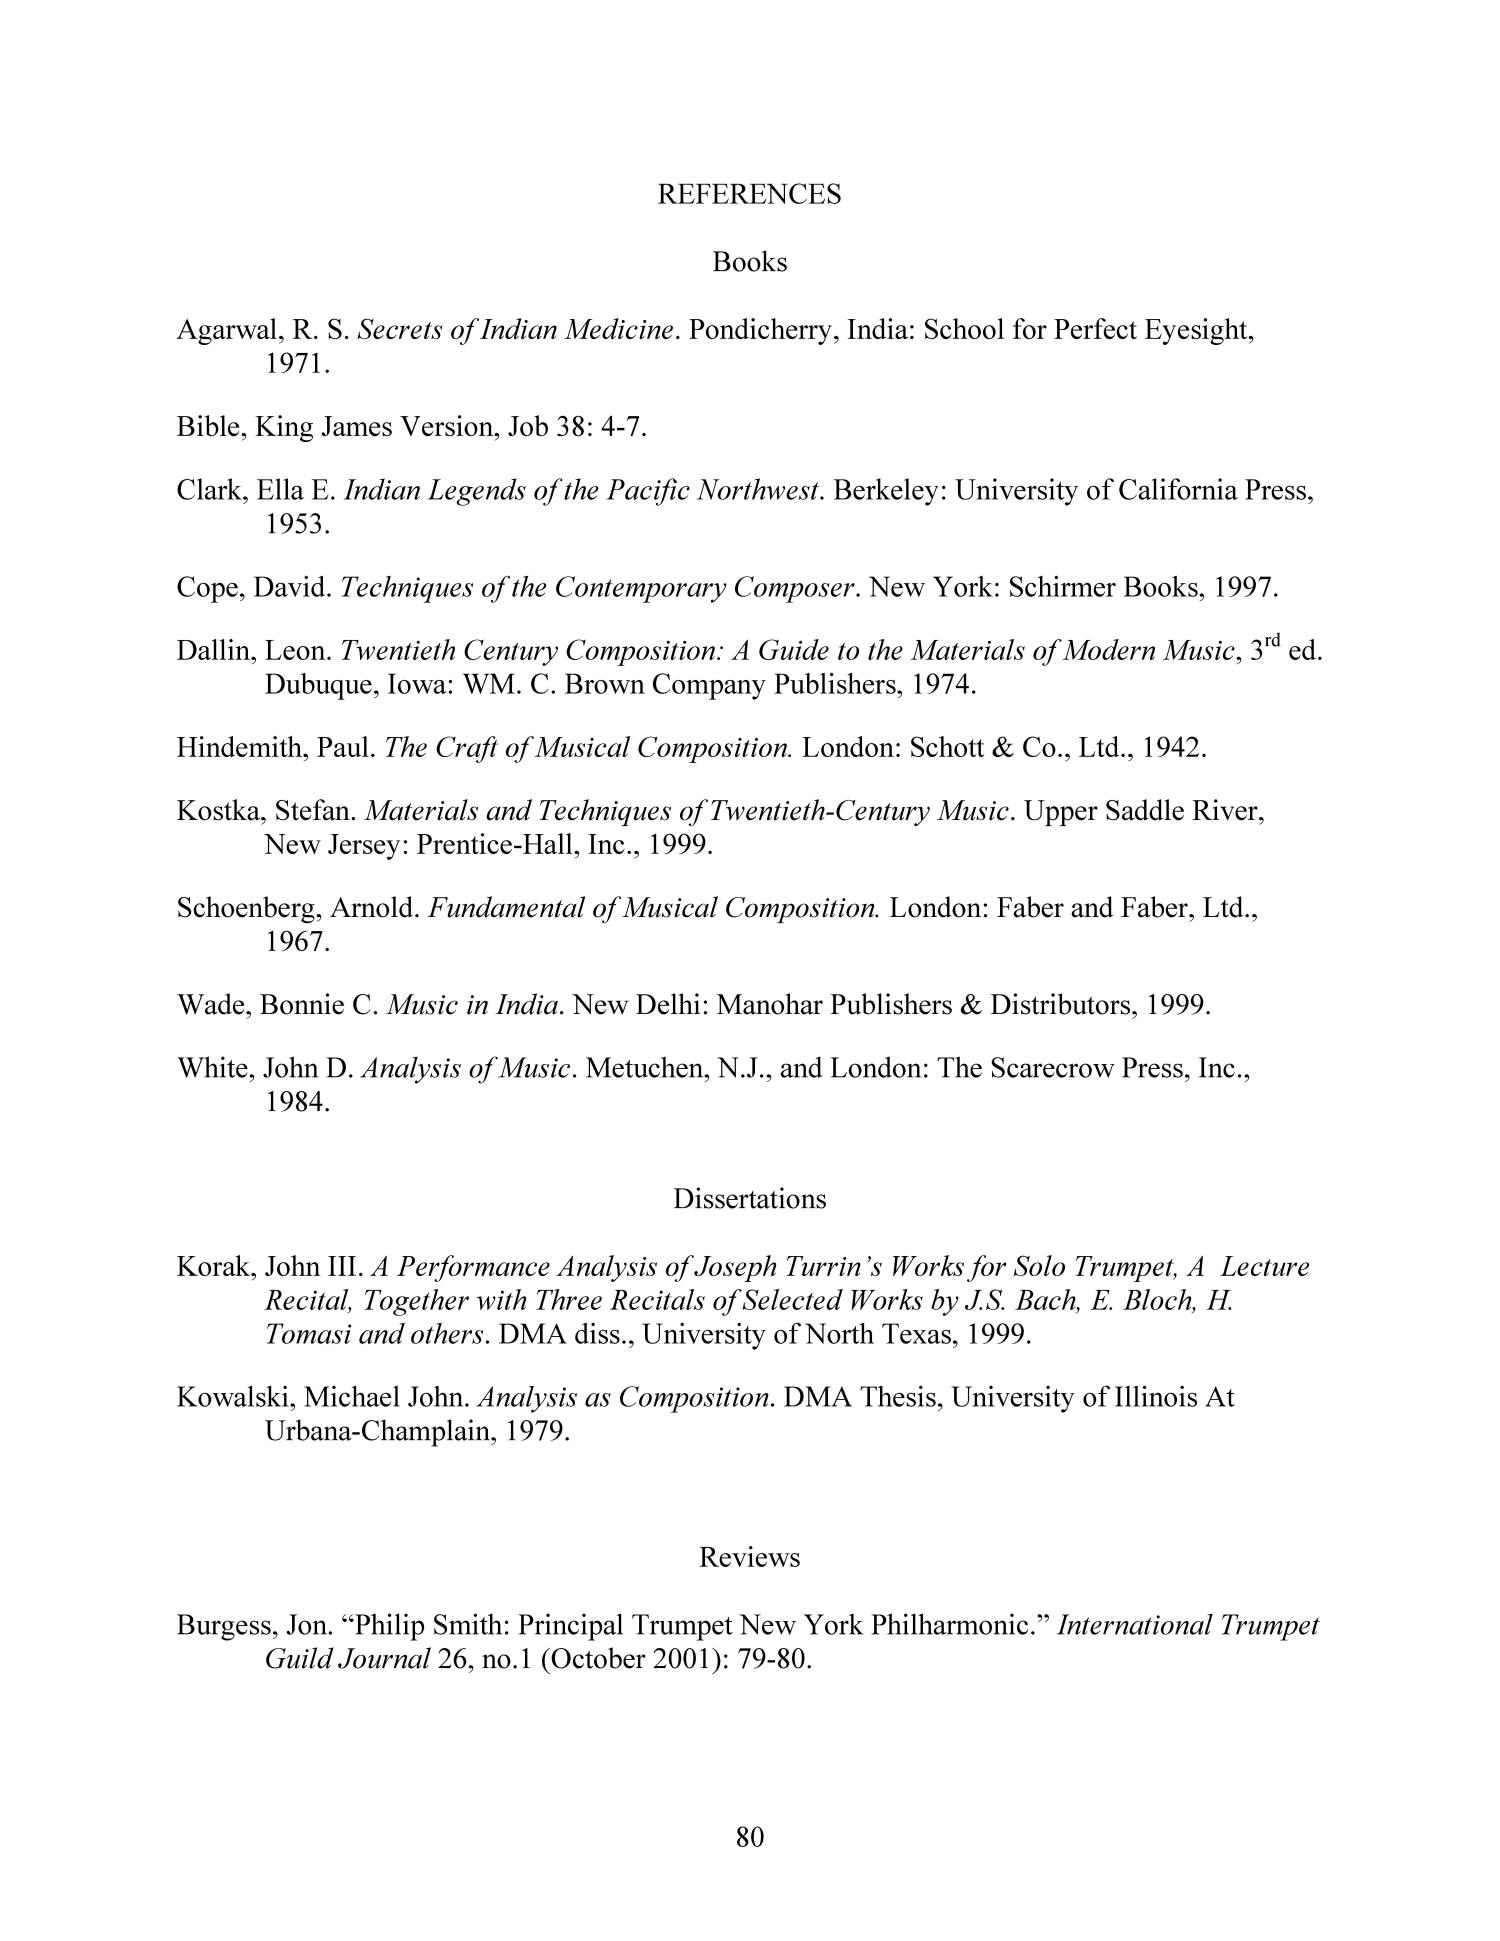 Hemispheres for Wind Ensemble by Joseph Turrin: A Critical Analysis
                                                
                                                    80
                                                